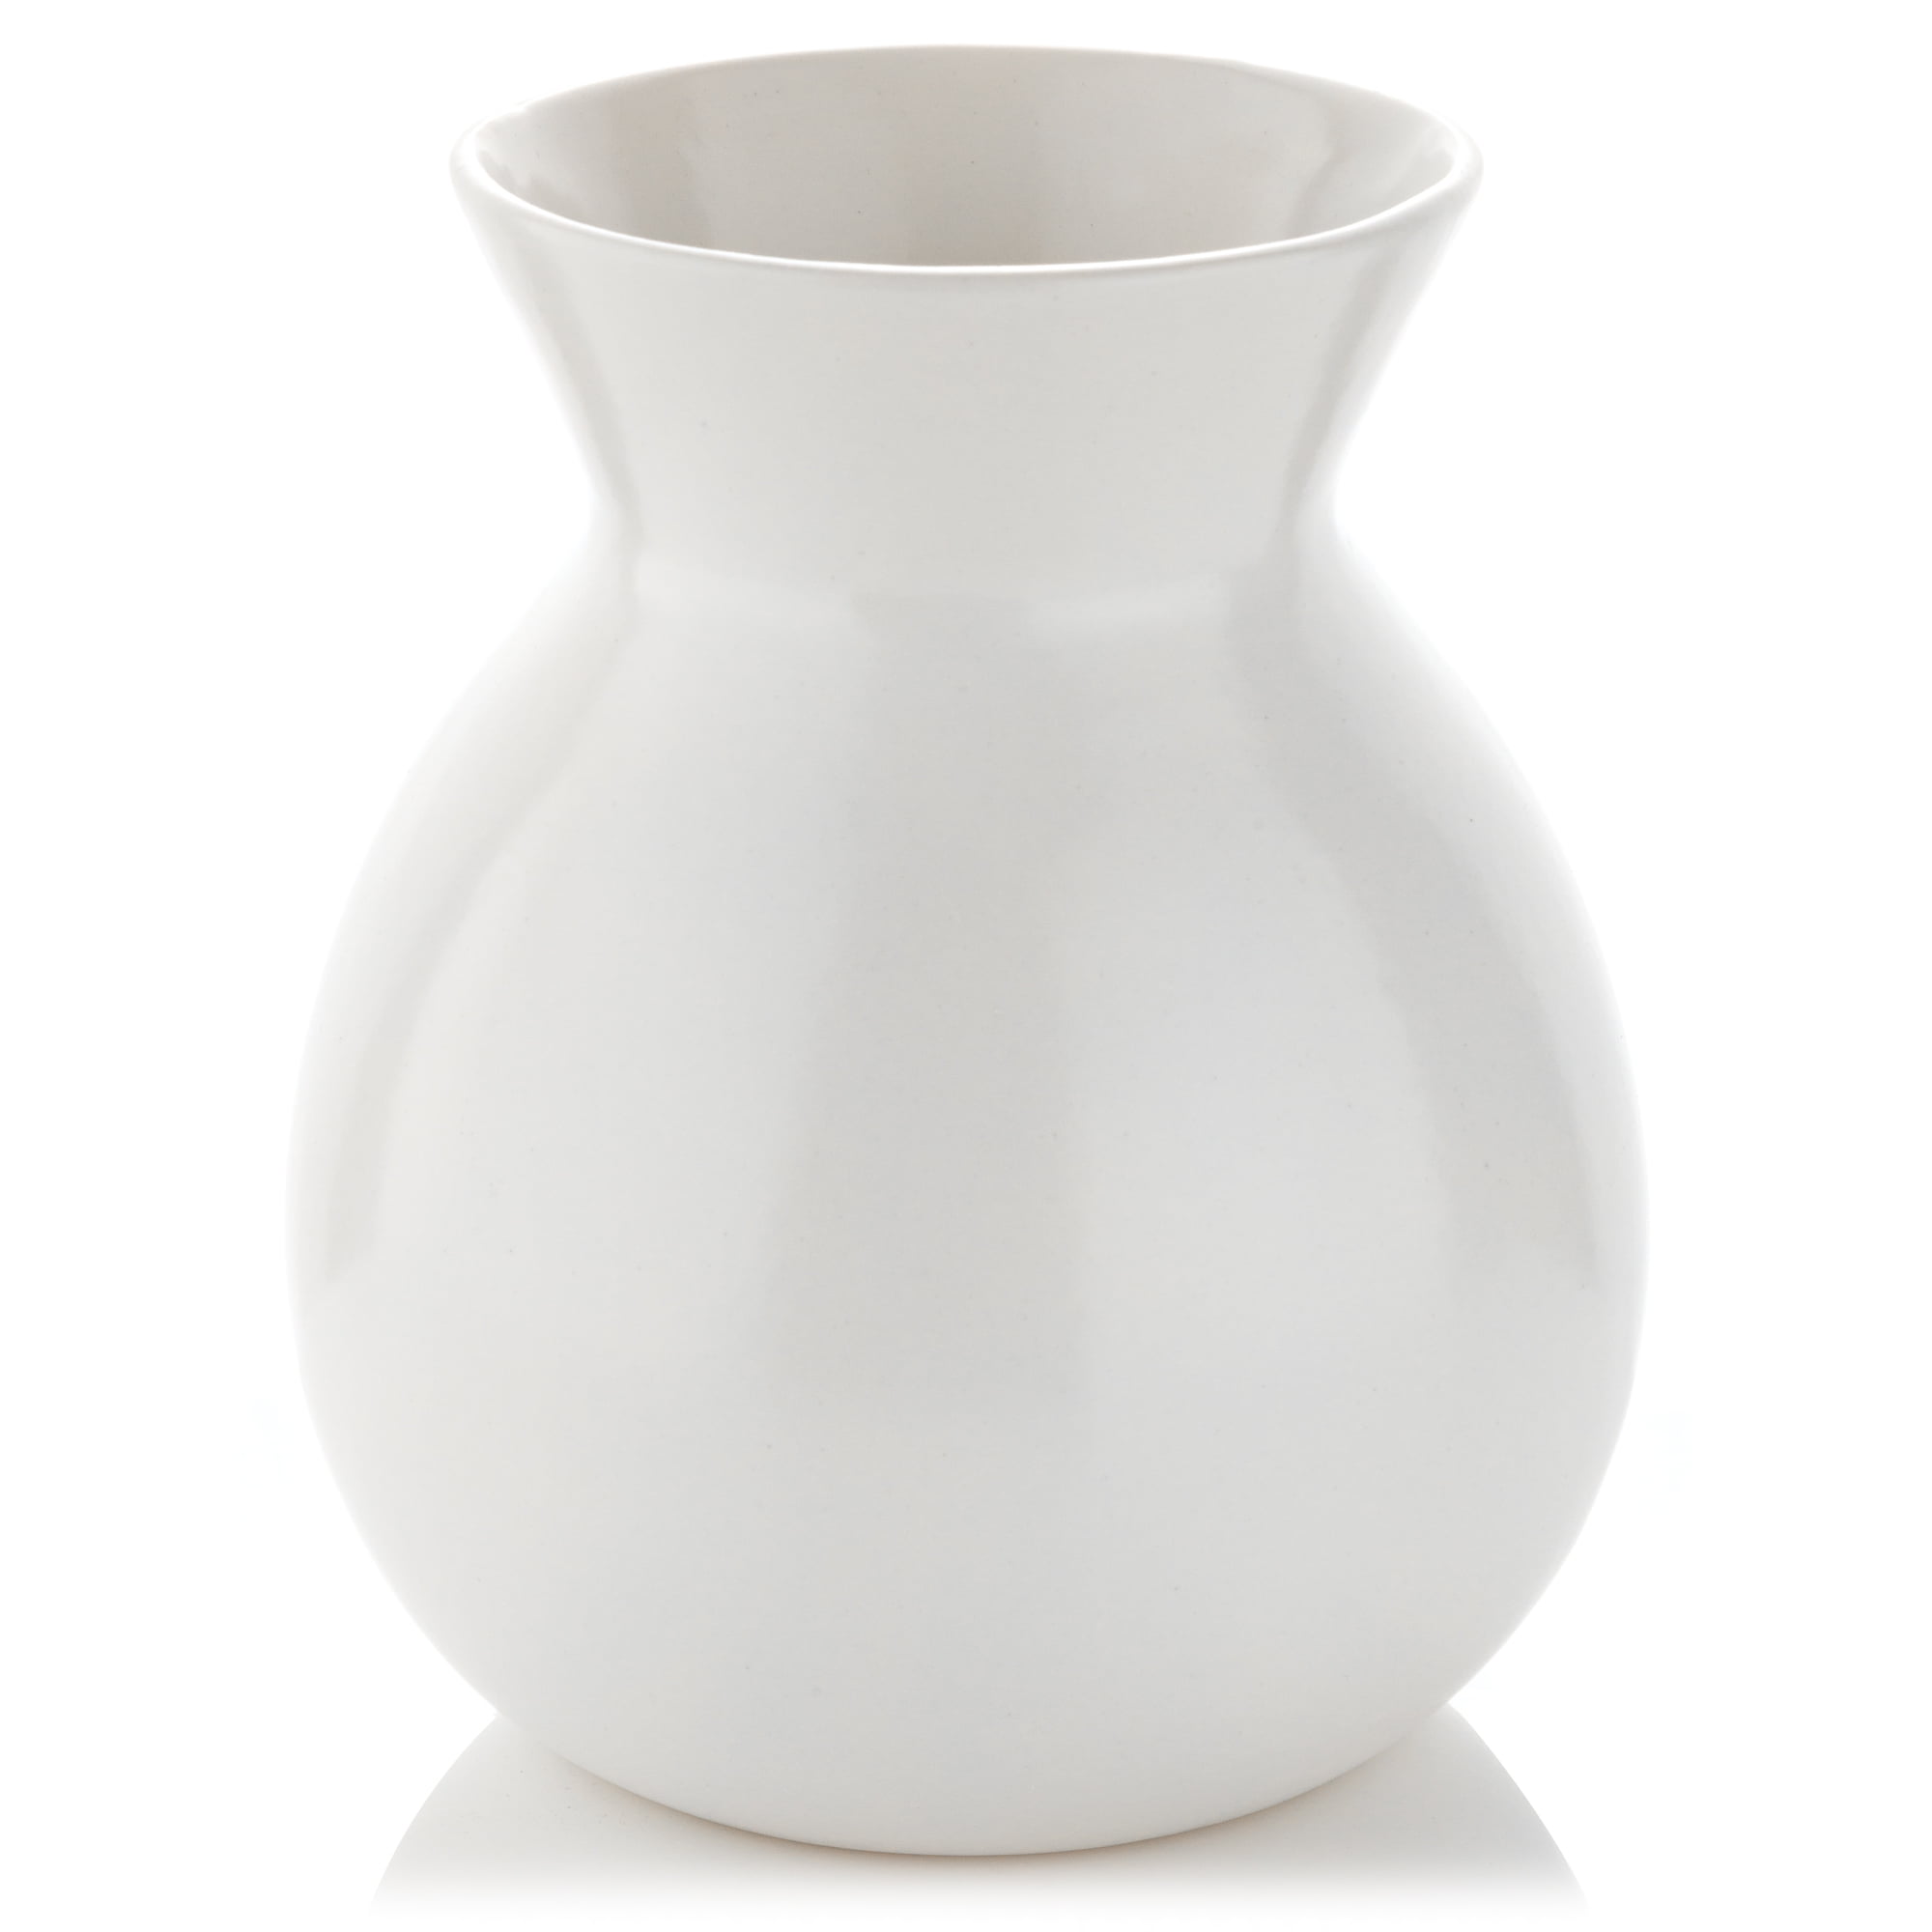 Better Homes & Gardens White Rustic Ceramic Decorative Table Vase, 8"x6.75"